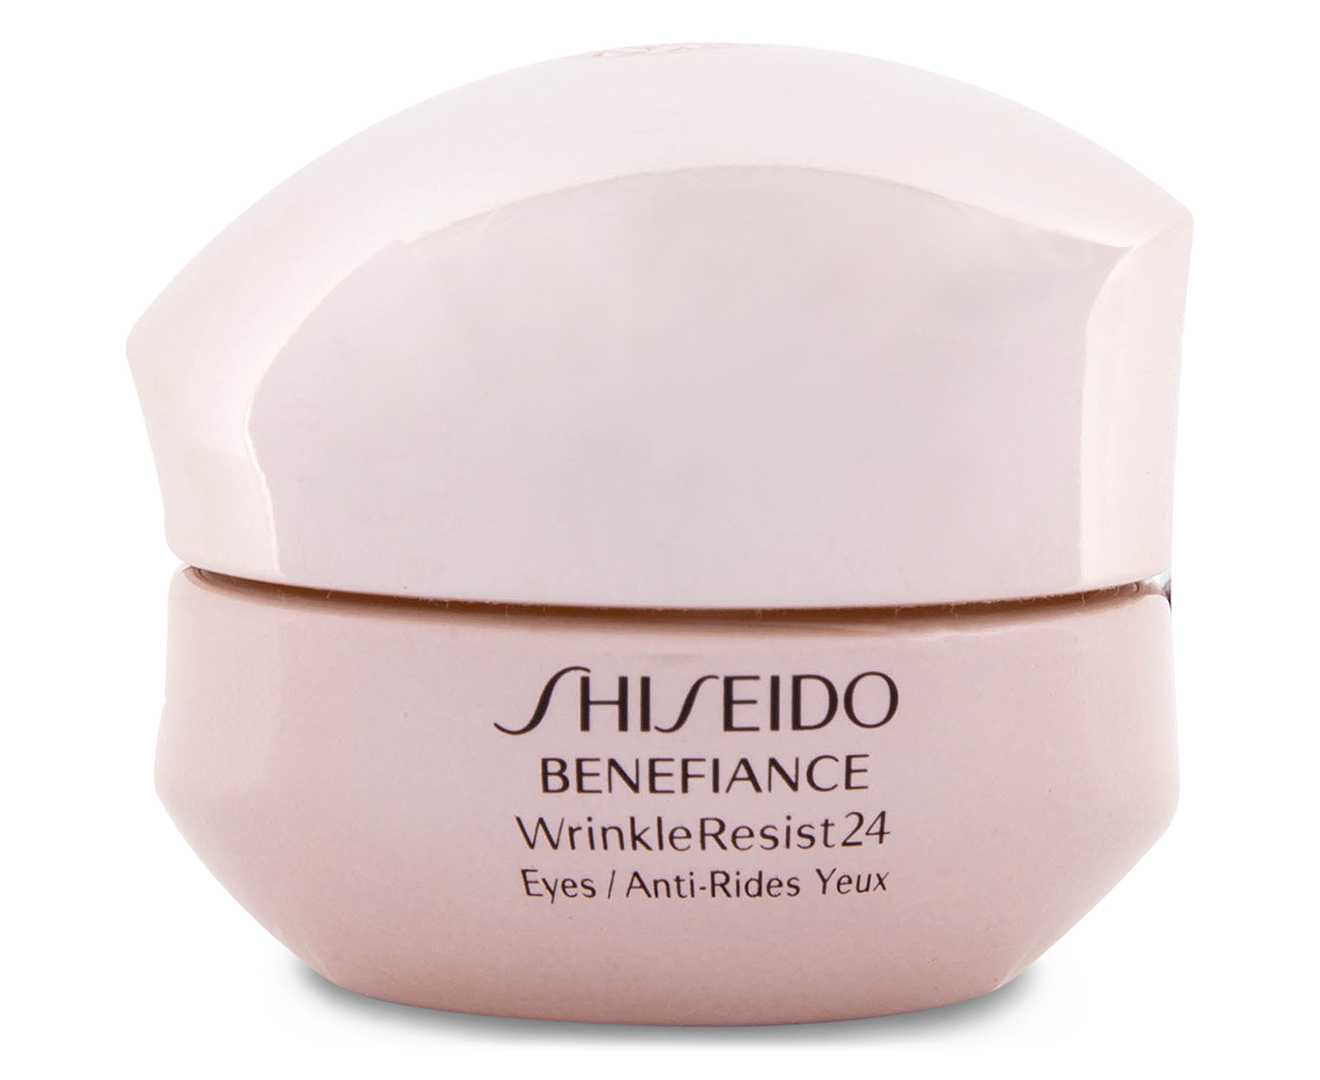 Shiseido крем для глаз Benefiance. Крем wrinkleresist24 от Shiseido. Shiseido Benefiance wrinkleresist24 Intensive Eye Contour Cream Creme Internet Anti-Rides yeux 2018. Shiseido Anti Wrinkle Cream. Крем shiseido benefiance